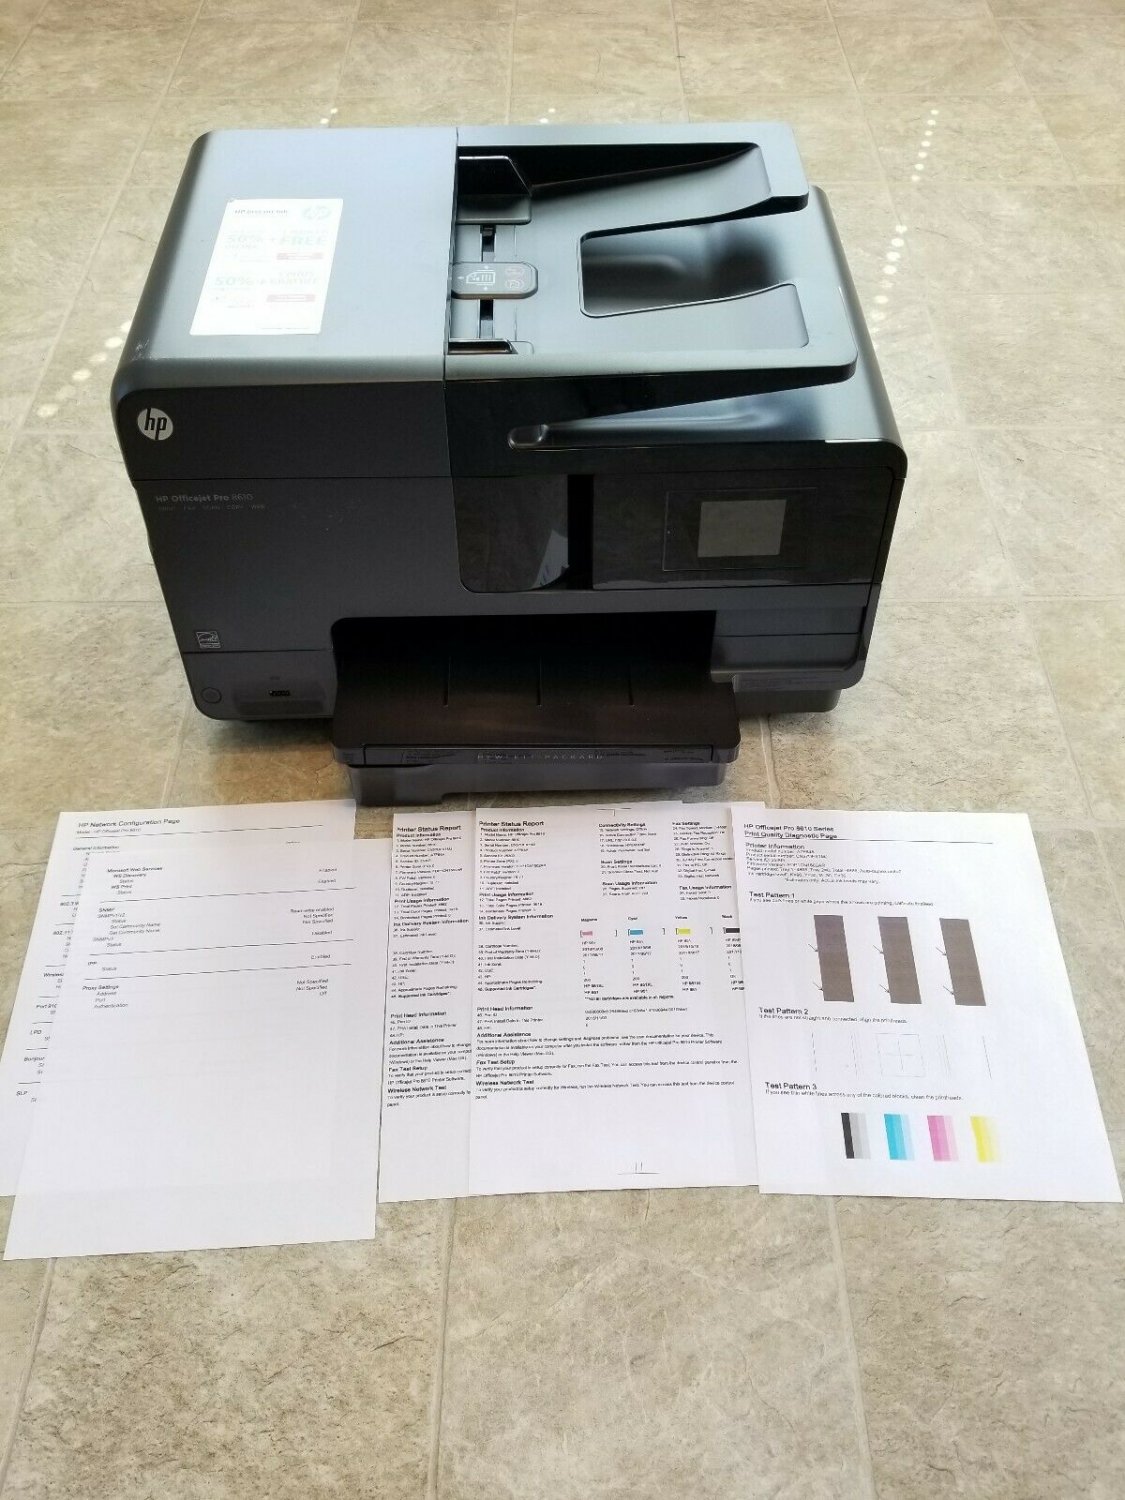 hp officejet pro 8610 installing network printer stuck